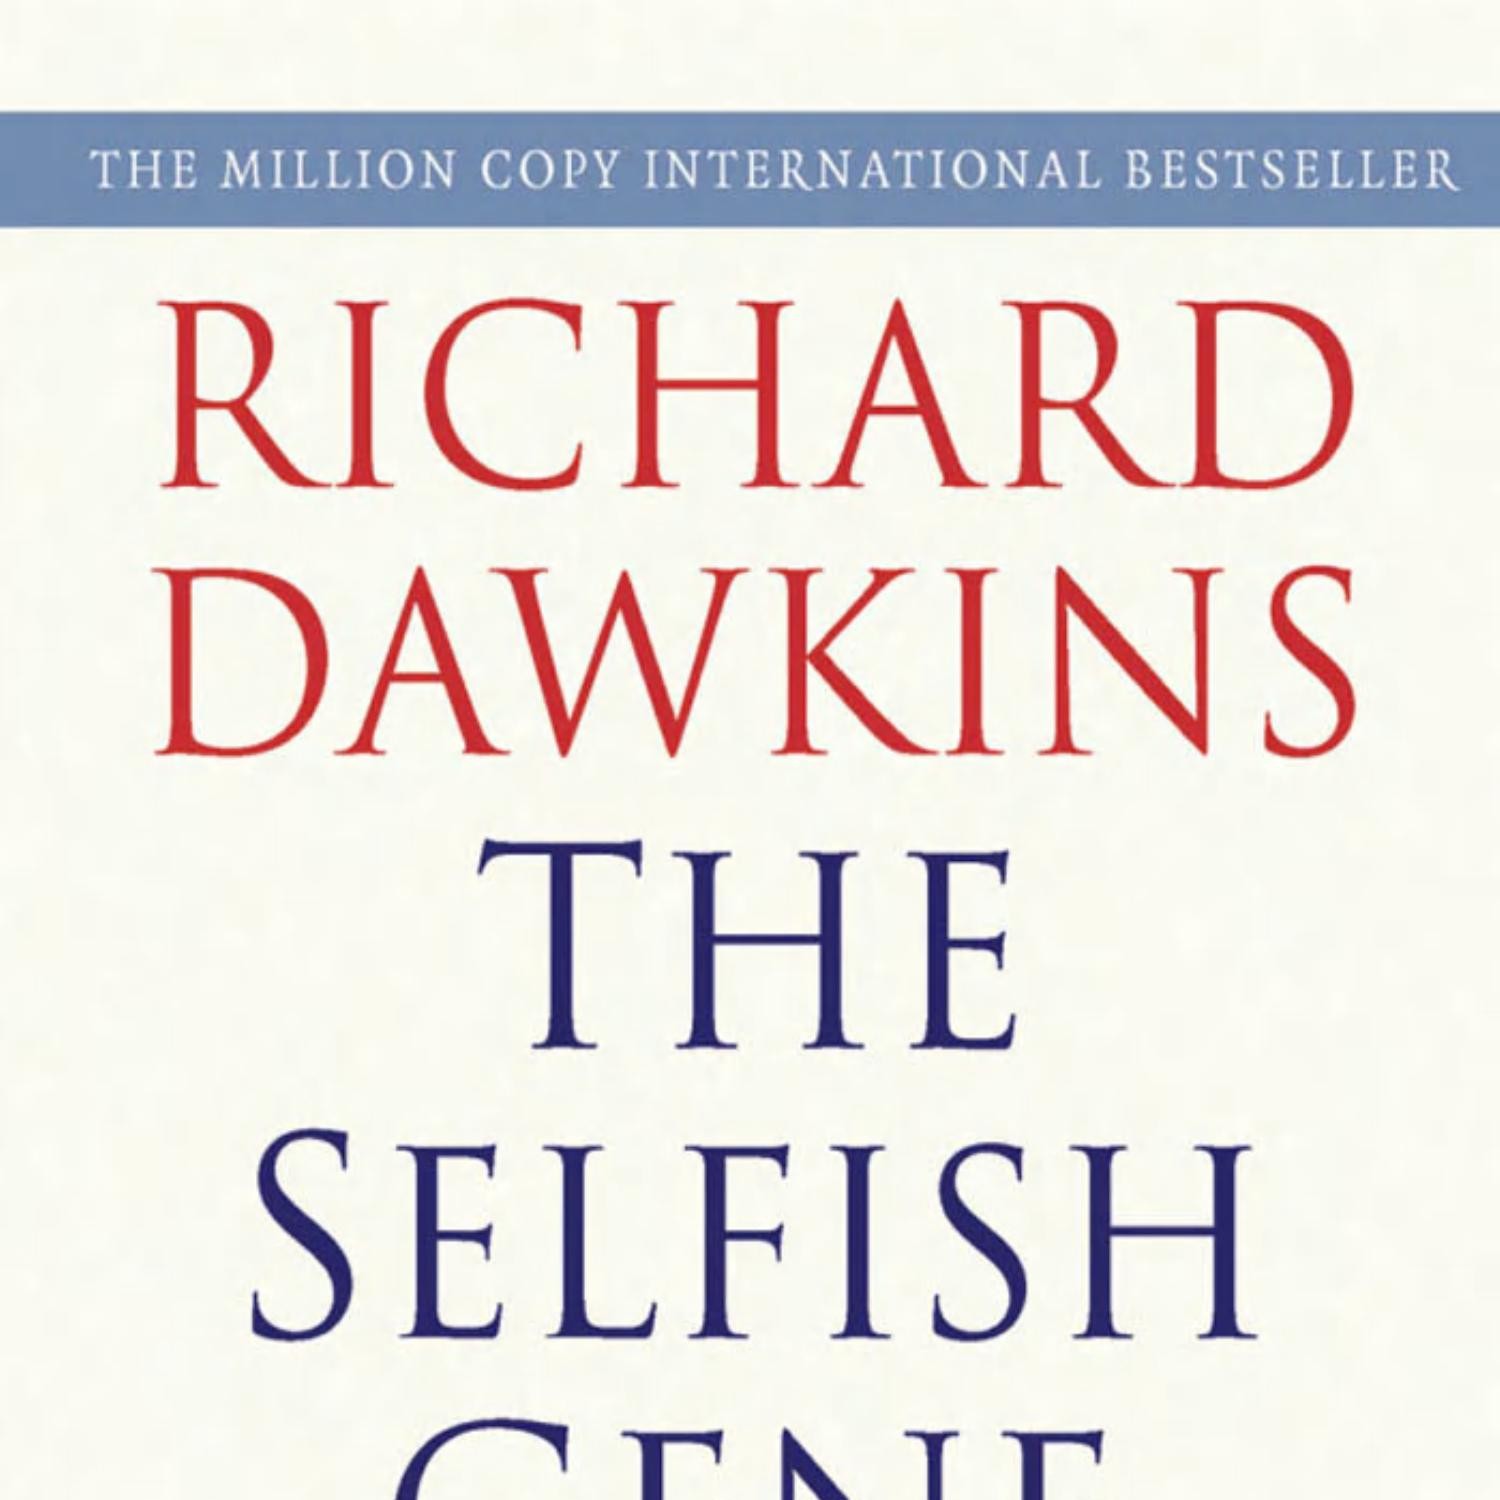 the selfish gene